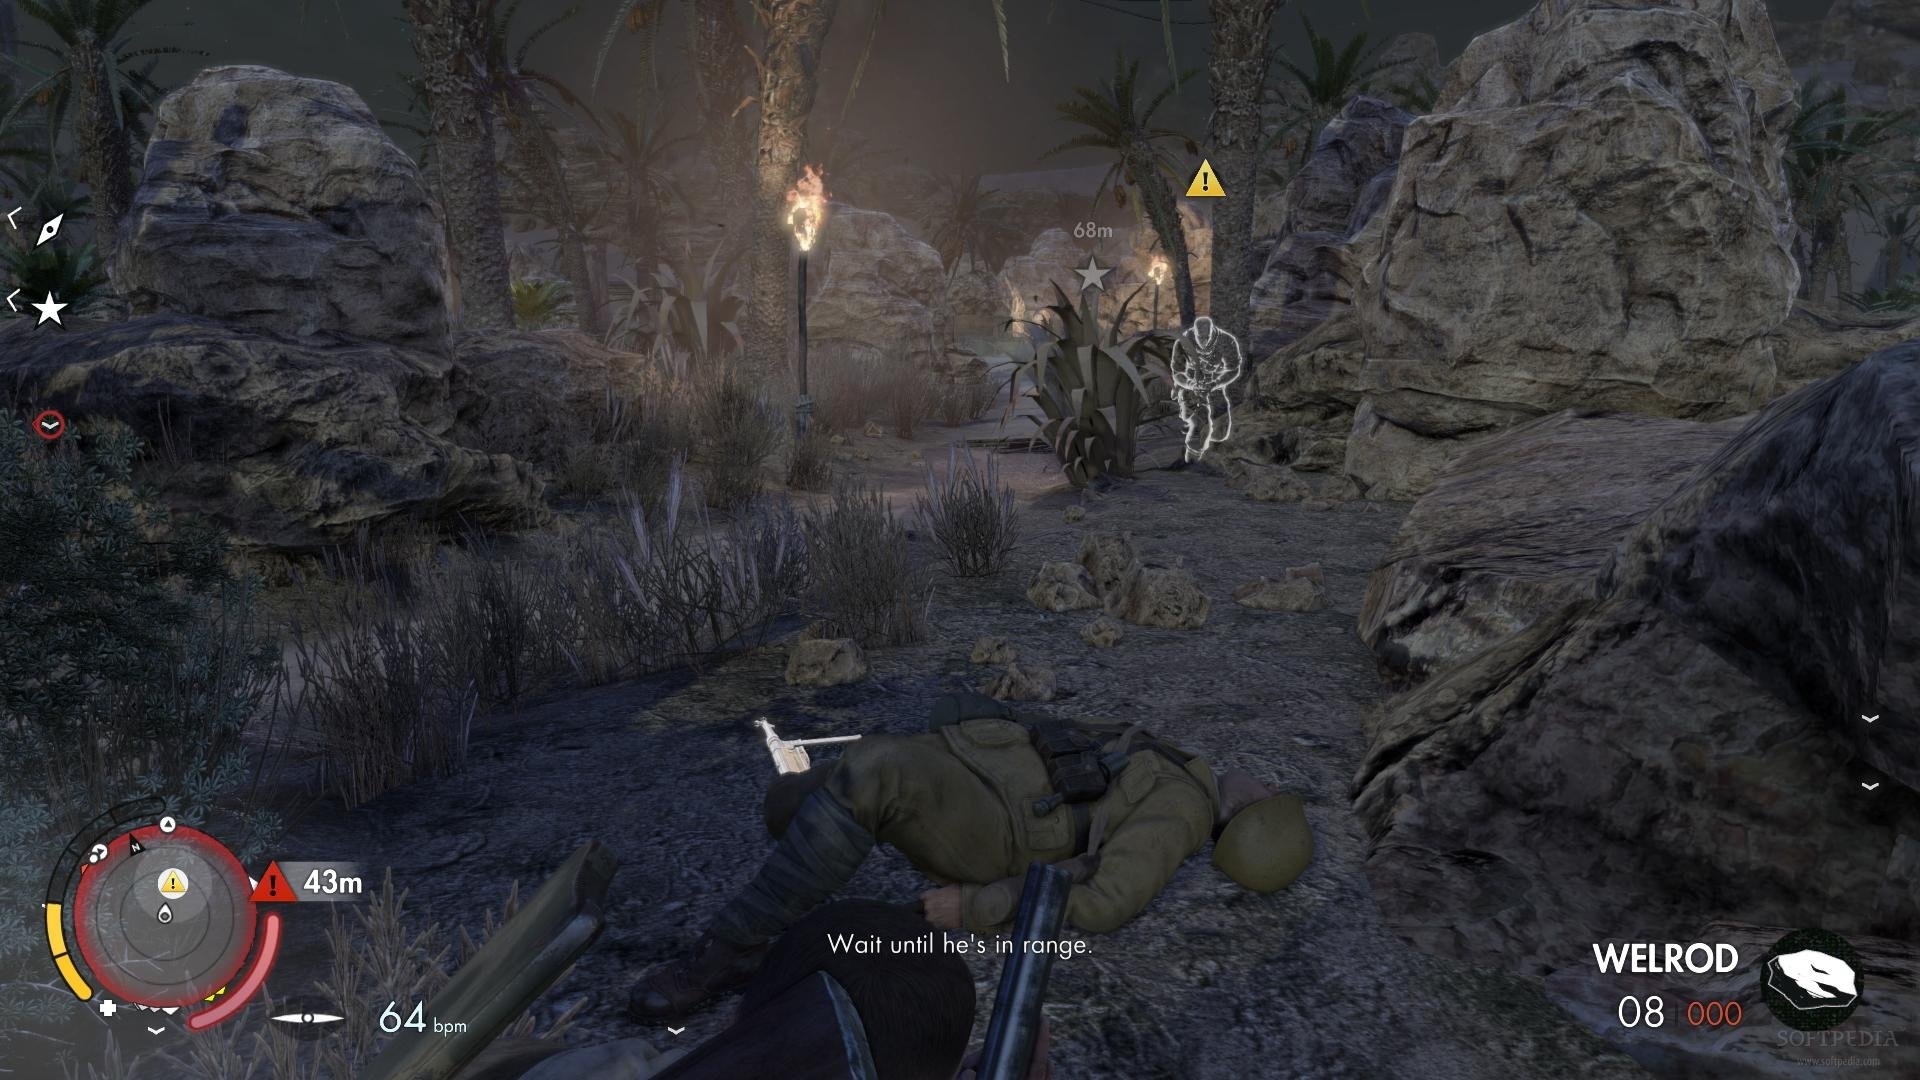 sniper elite 3 keeps crashing